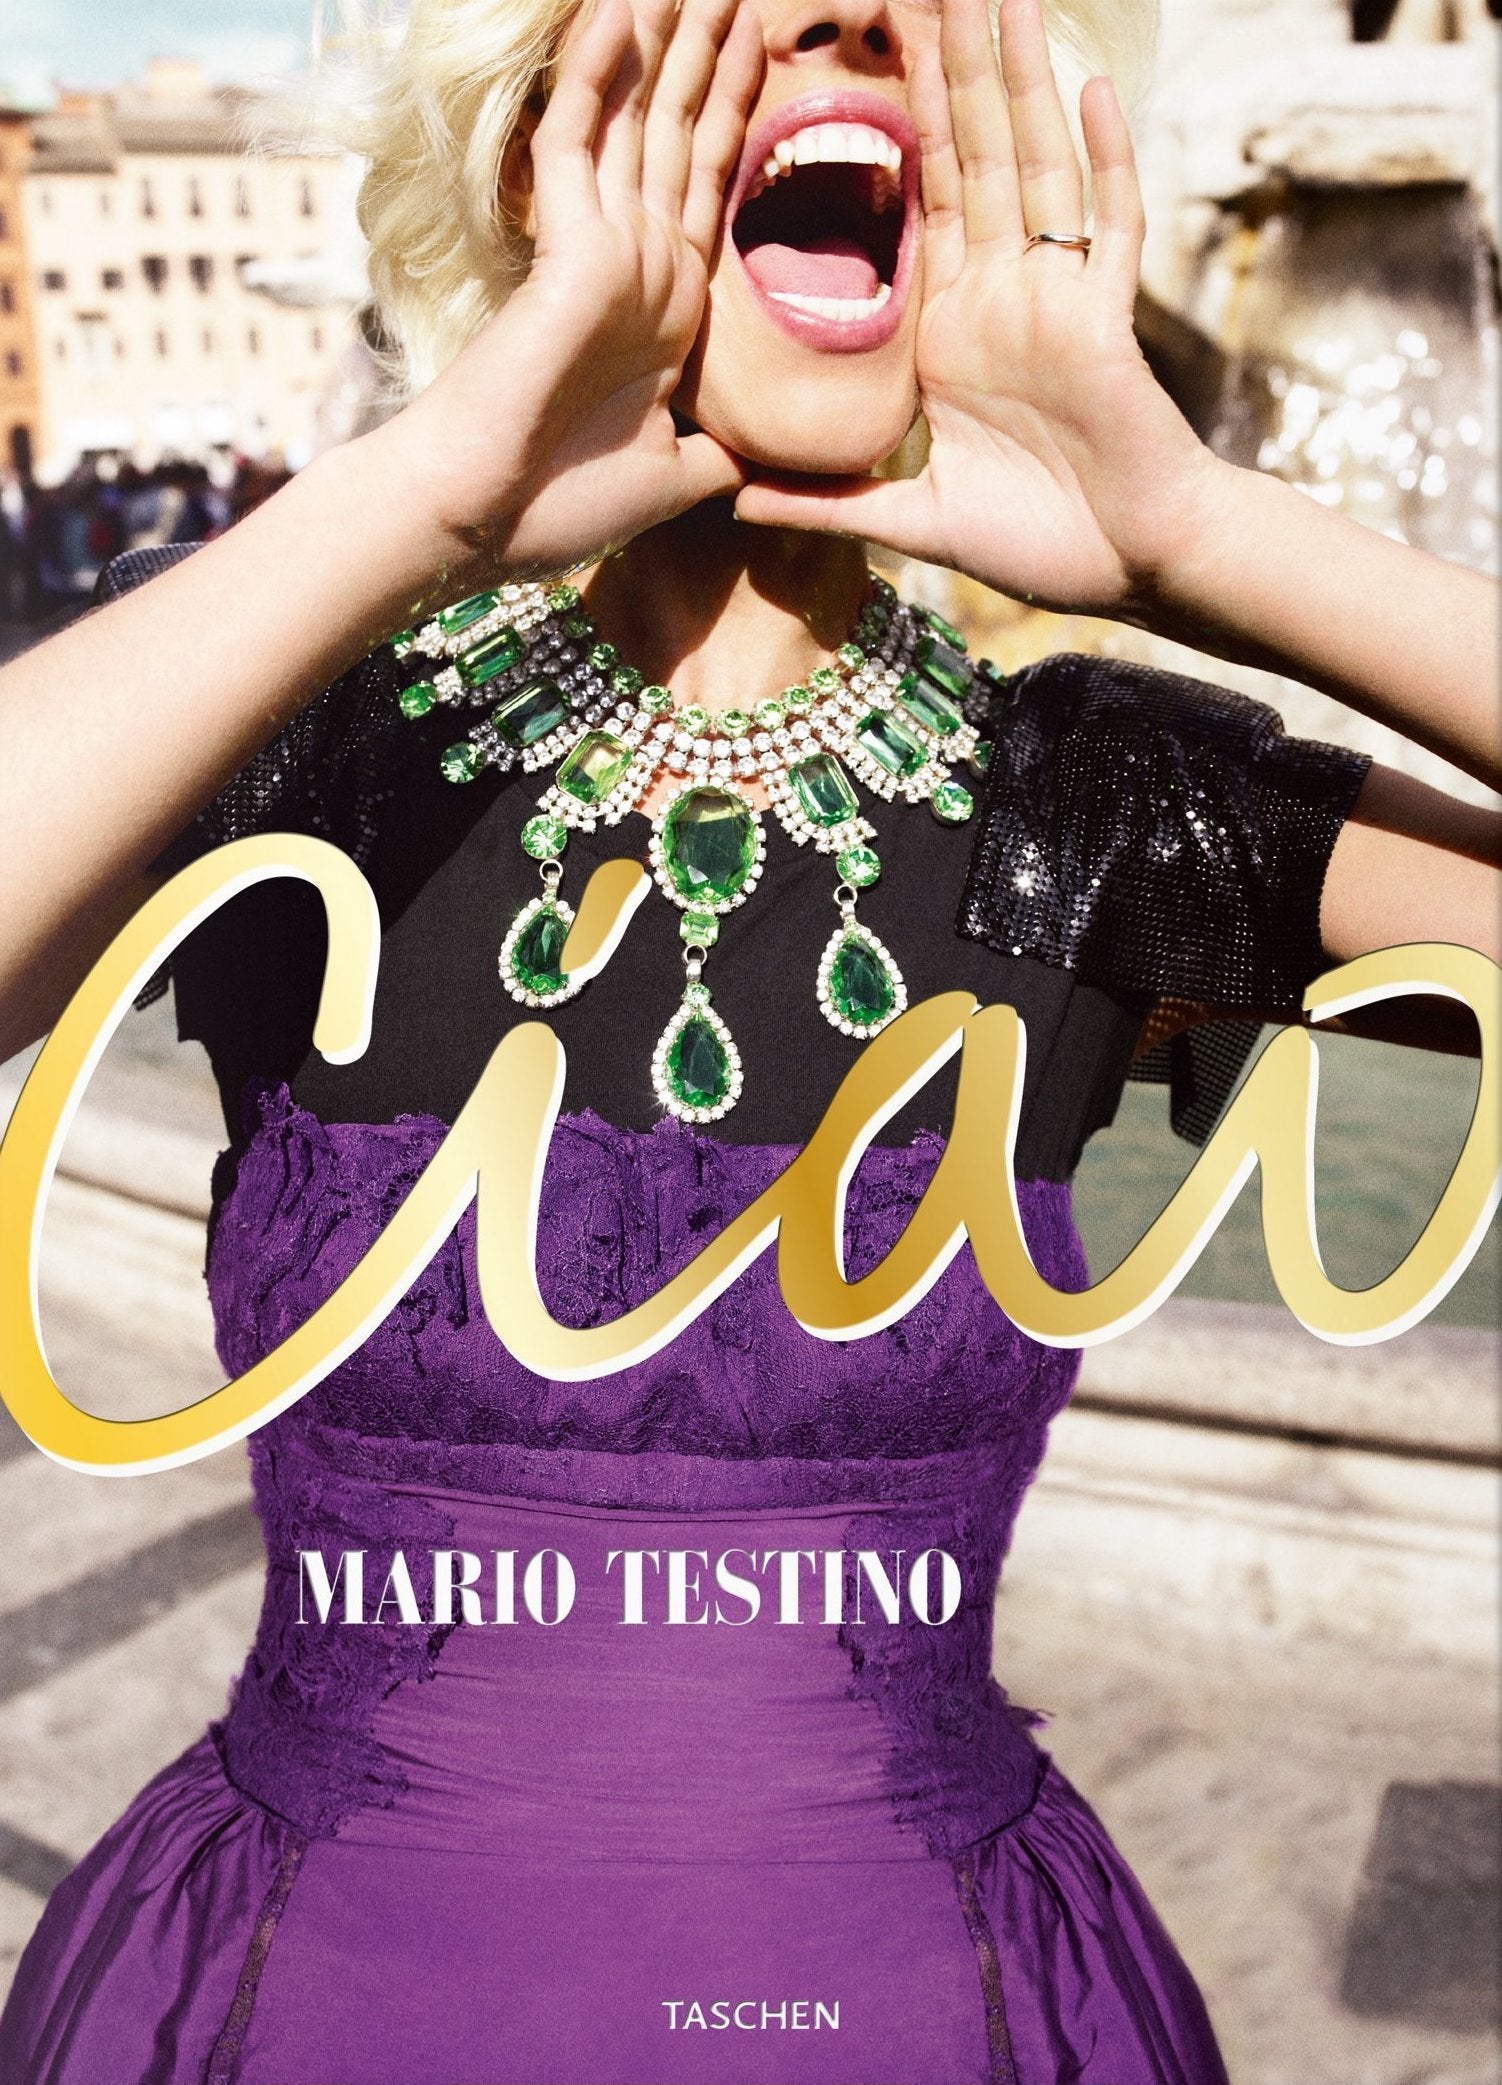 Ciao - Mario Testino